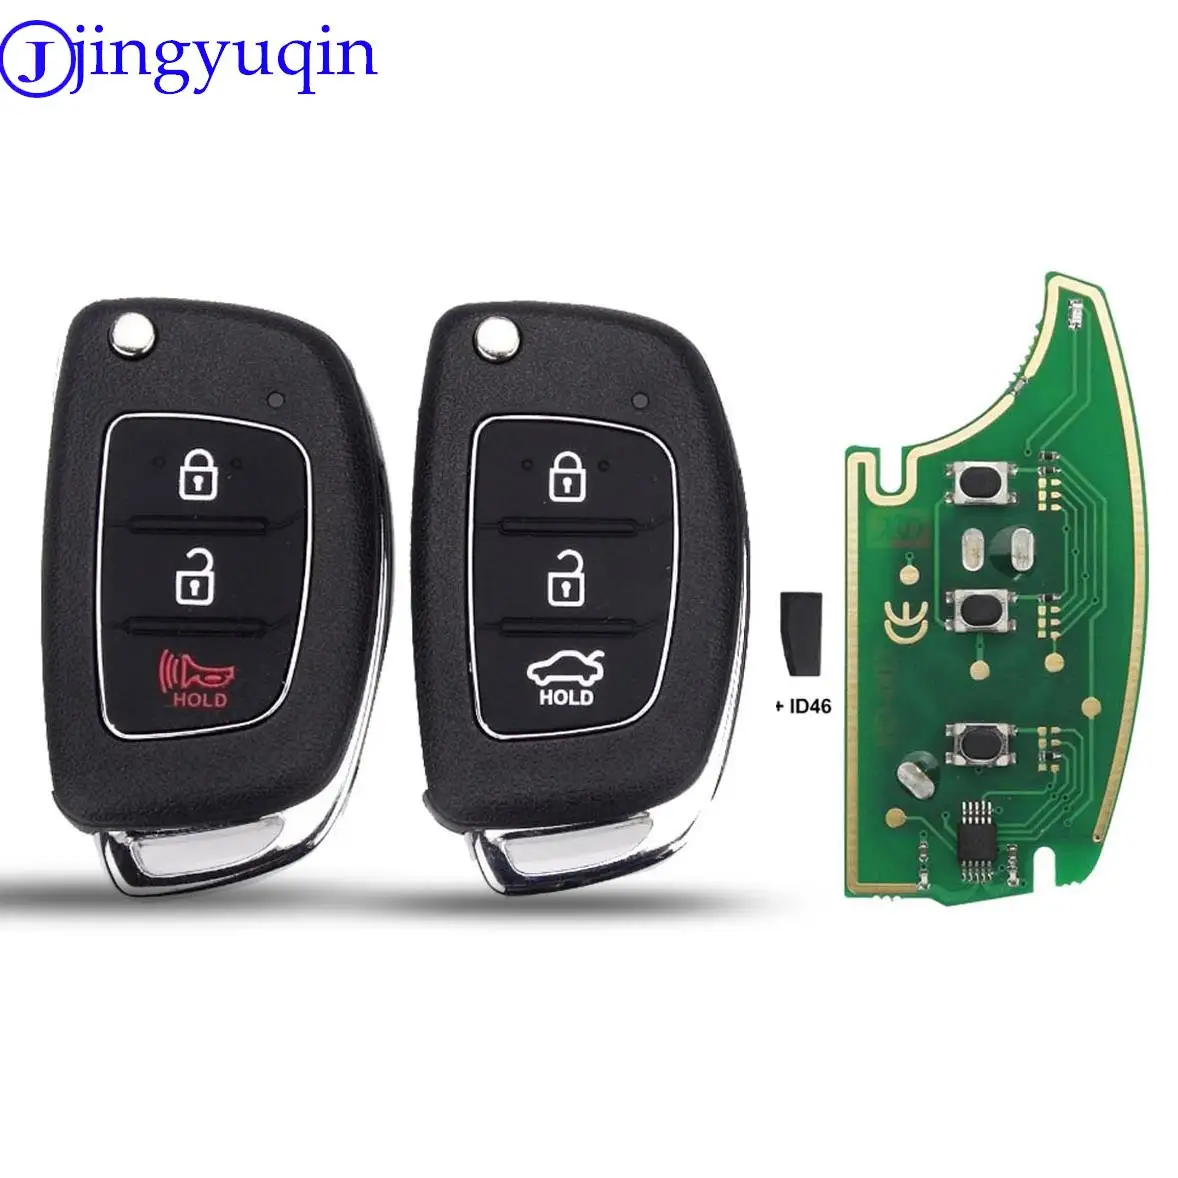 Jingyuqin 3B 433 МГц с id46 Автомобильный ключ плата управления для Hyundai Solaris Accent Tucson l10 l20 l30